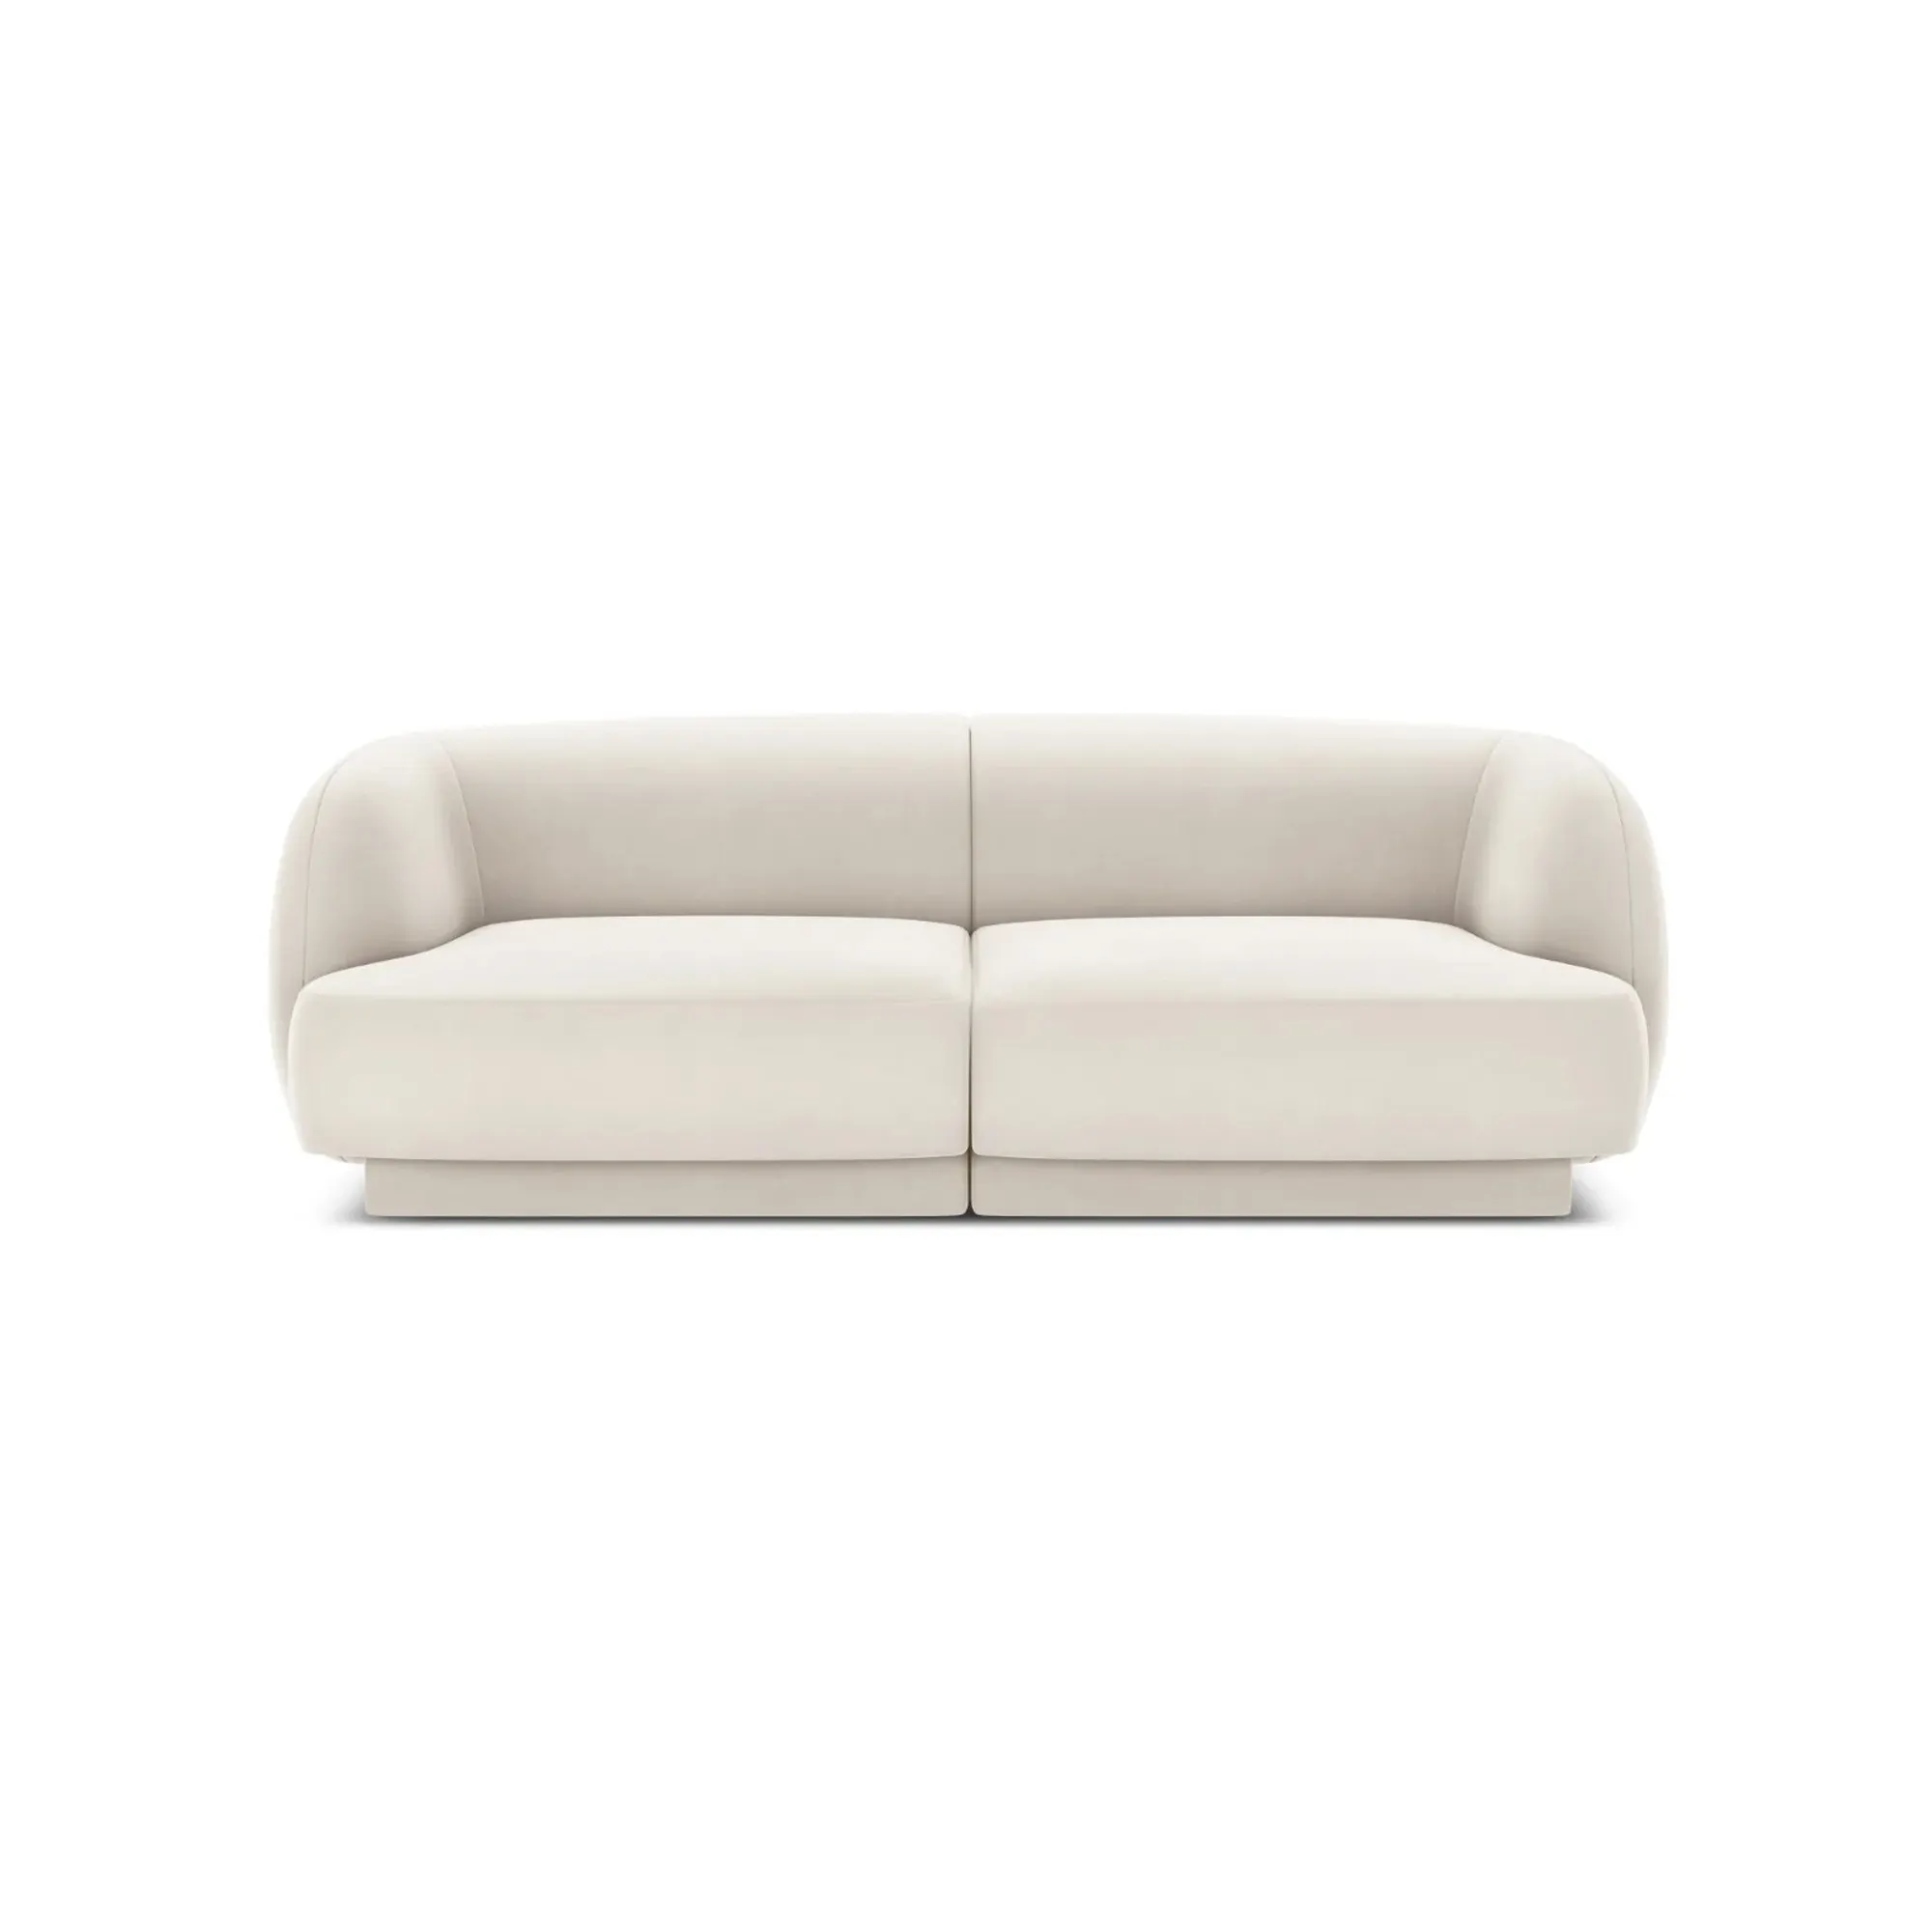 3 Seater White Fabric Sofa Living Room Furniture